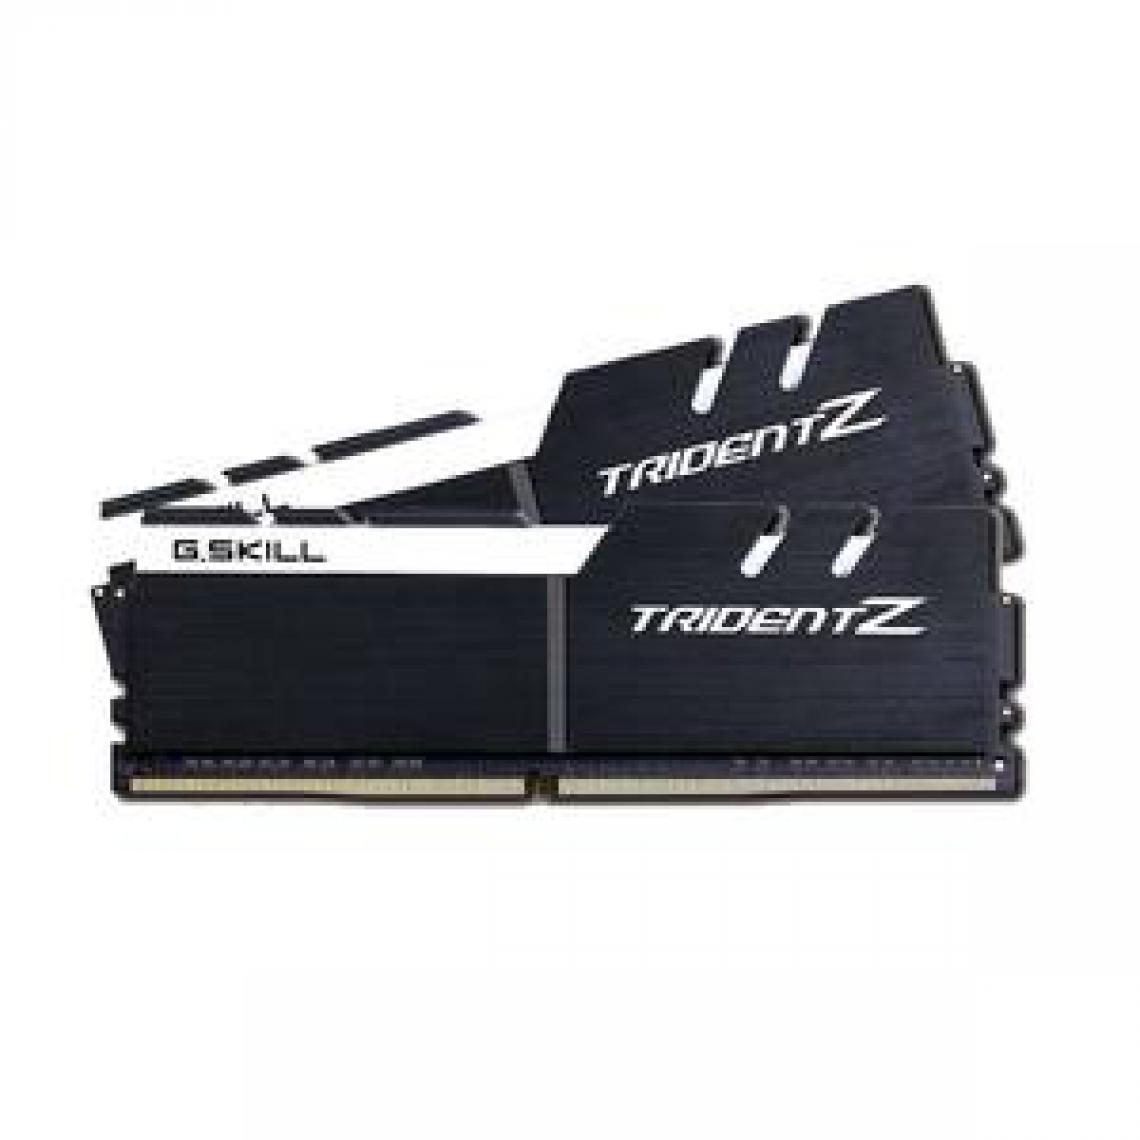 Gskill - Trident Z 32 Go (2x 16 Go) DDR4 3200 MHz CL14 - Blanc et noir - RAM PC Fixe